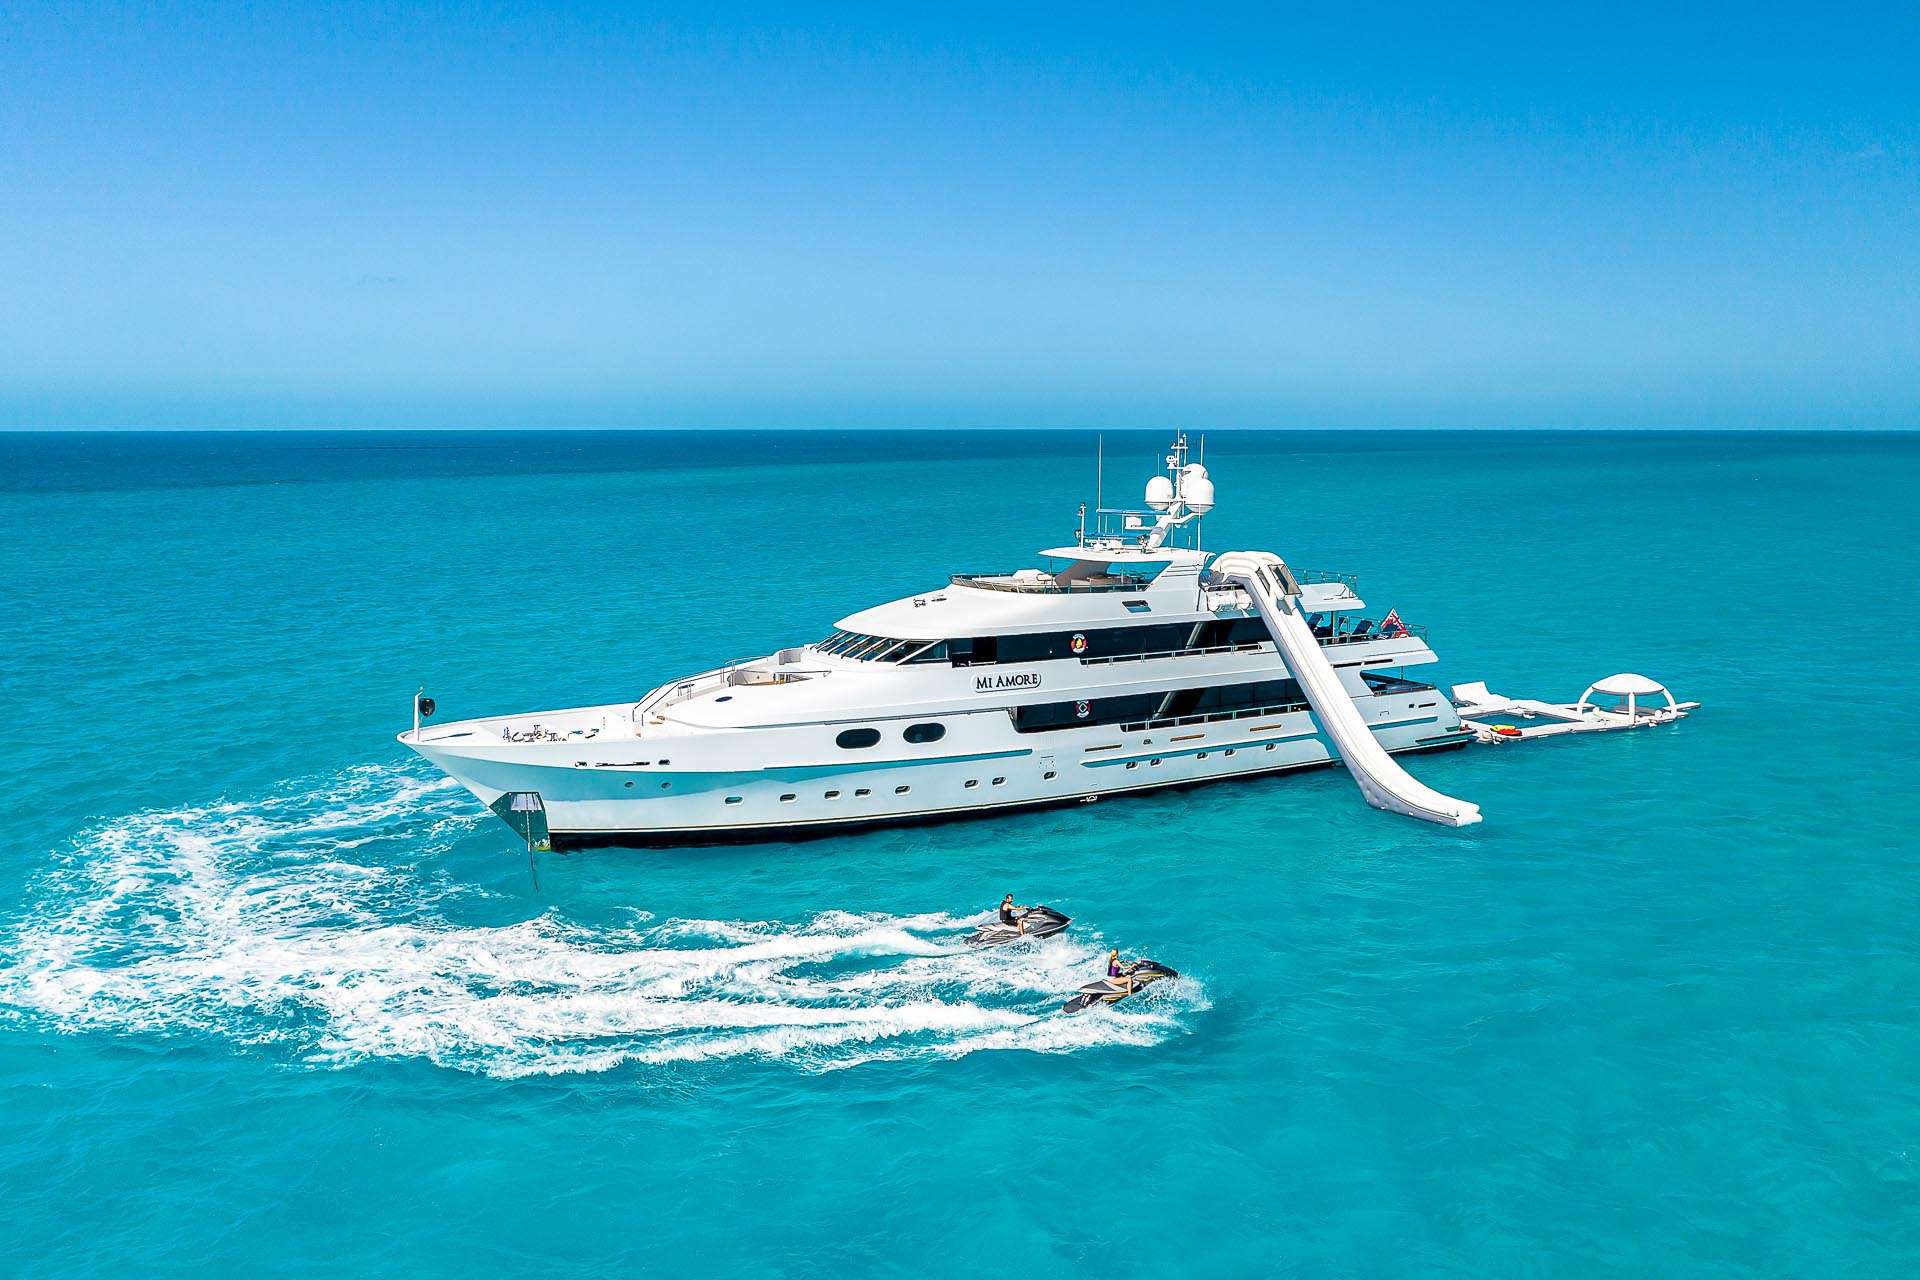 MI AMORE - Yacht Charter New England & Boat hire in US East Coast & Bahamas 1